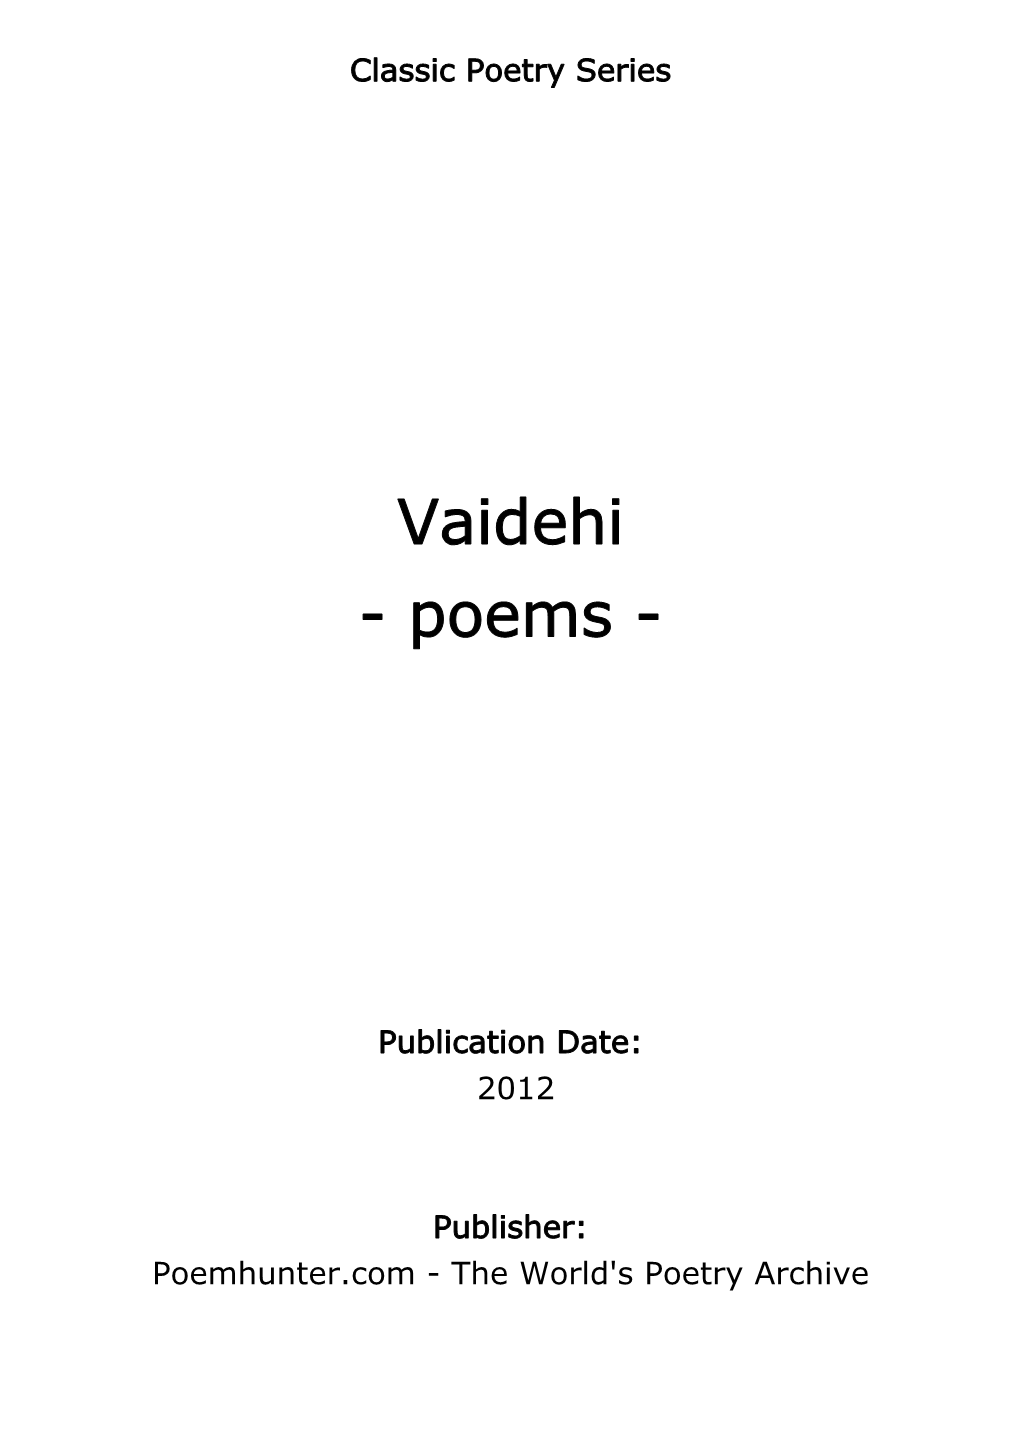 Vaidehi - Poems